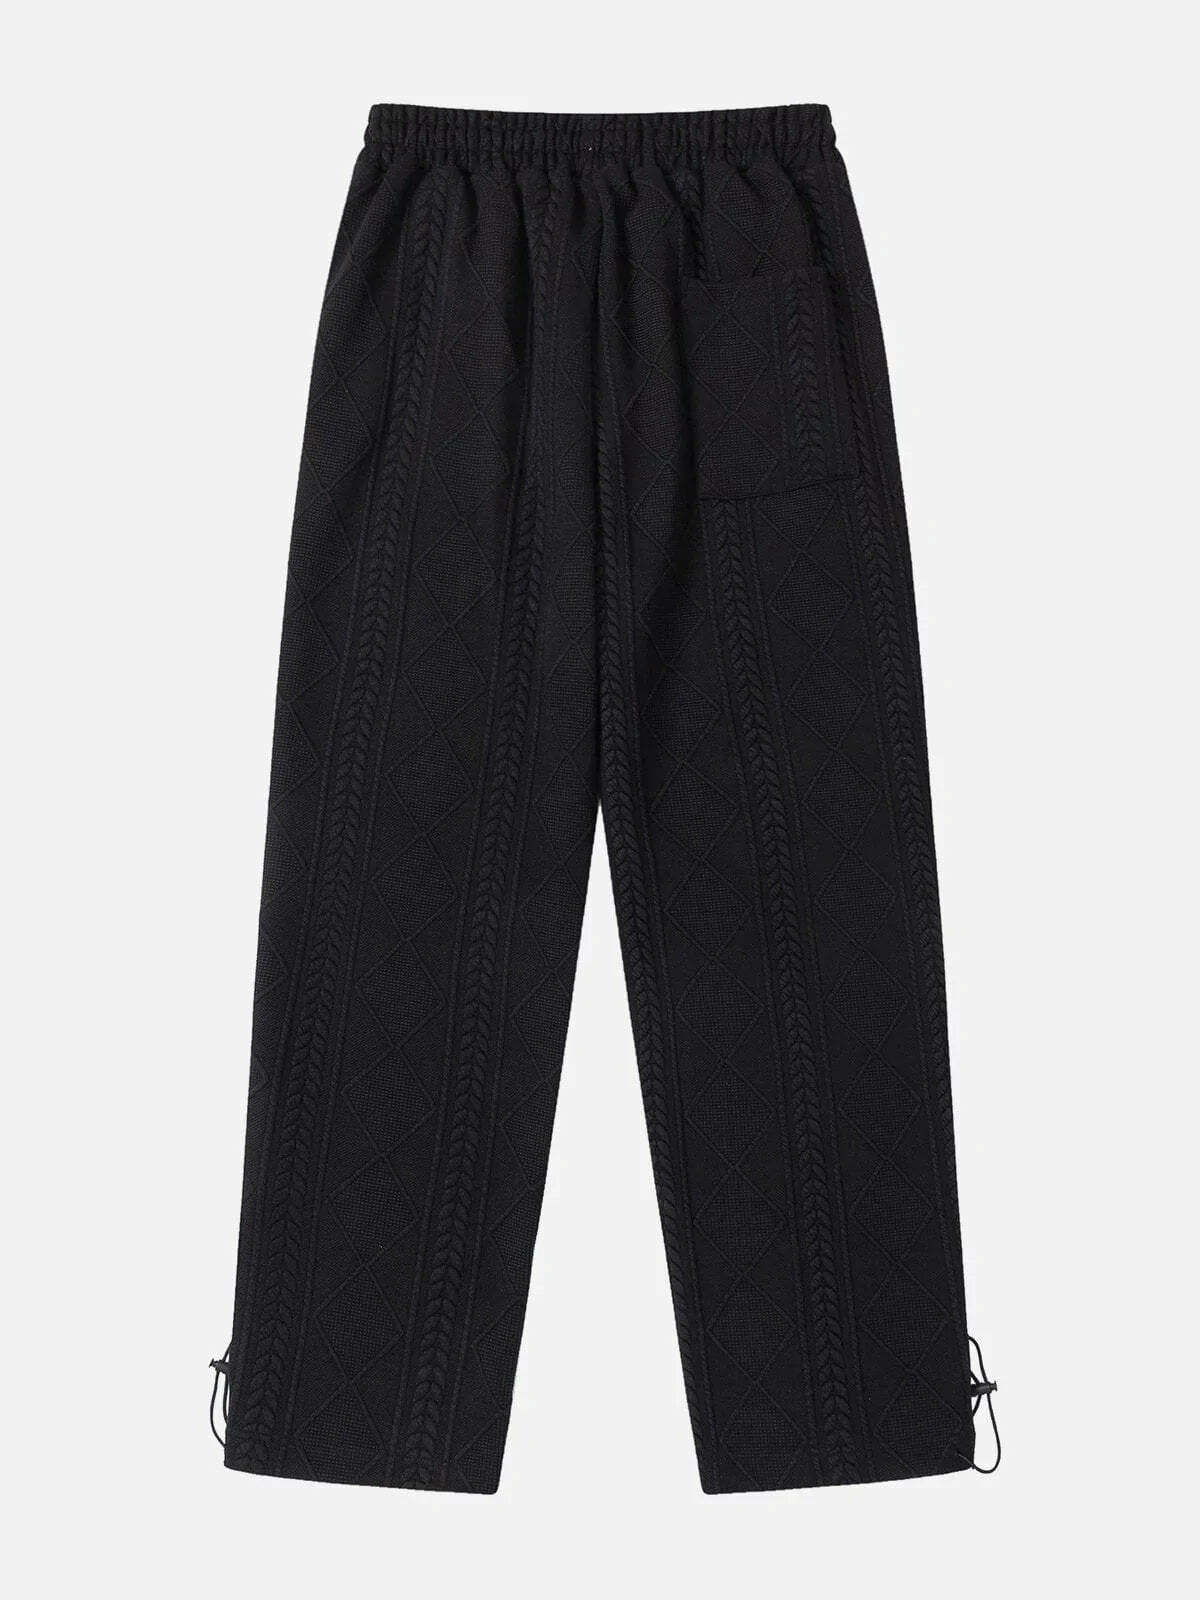 minimalist drawstring pants sleek & versatile streetwear 7059